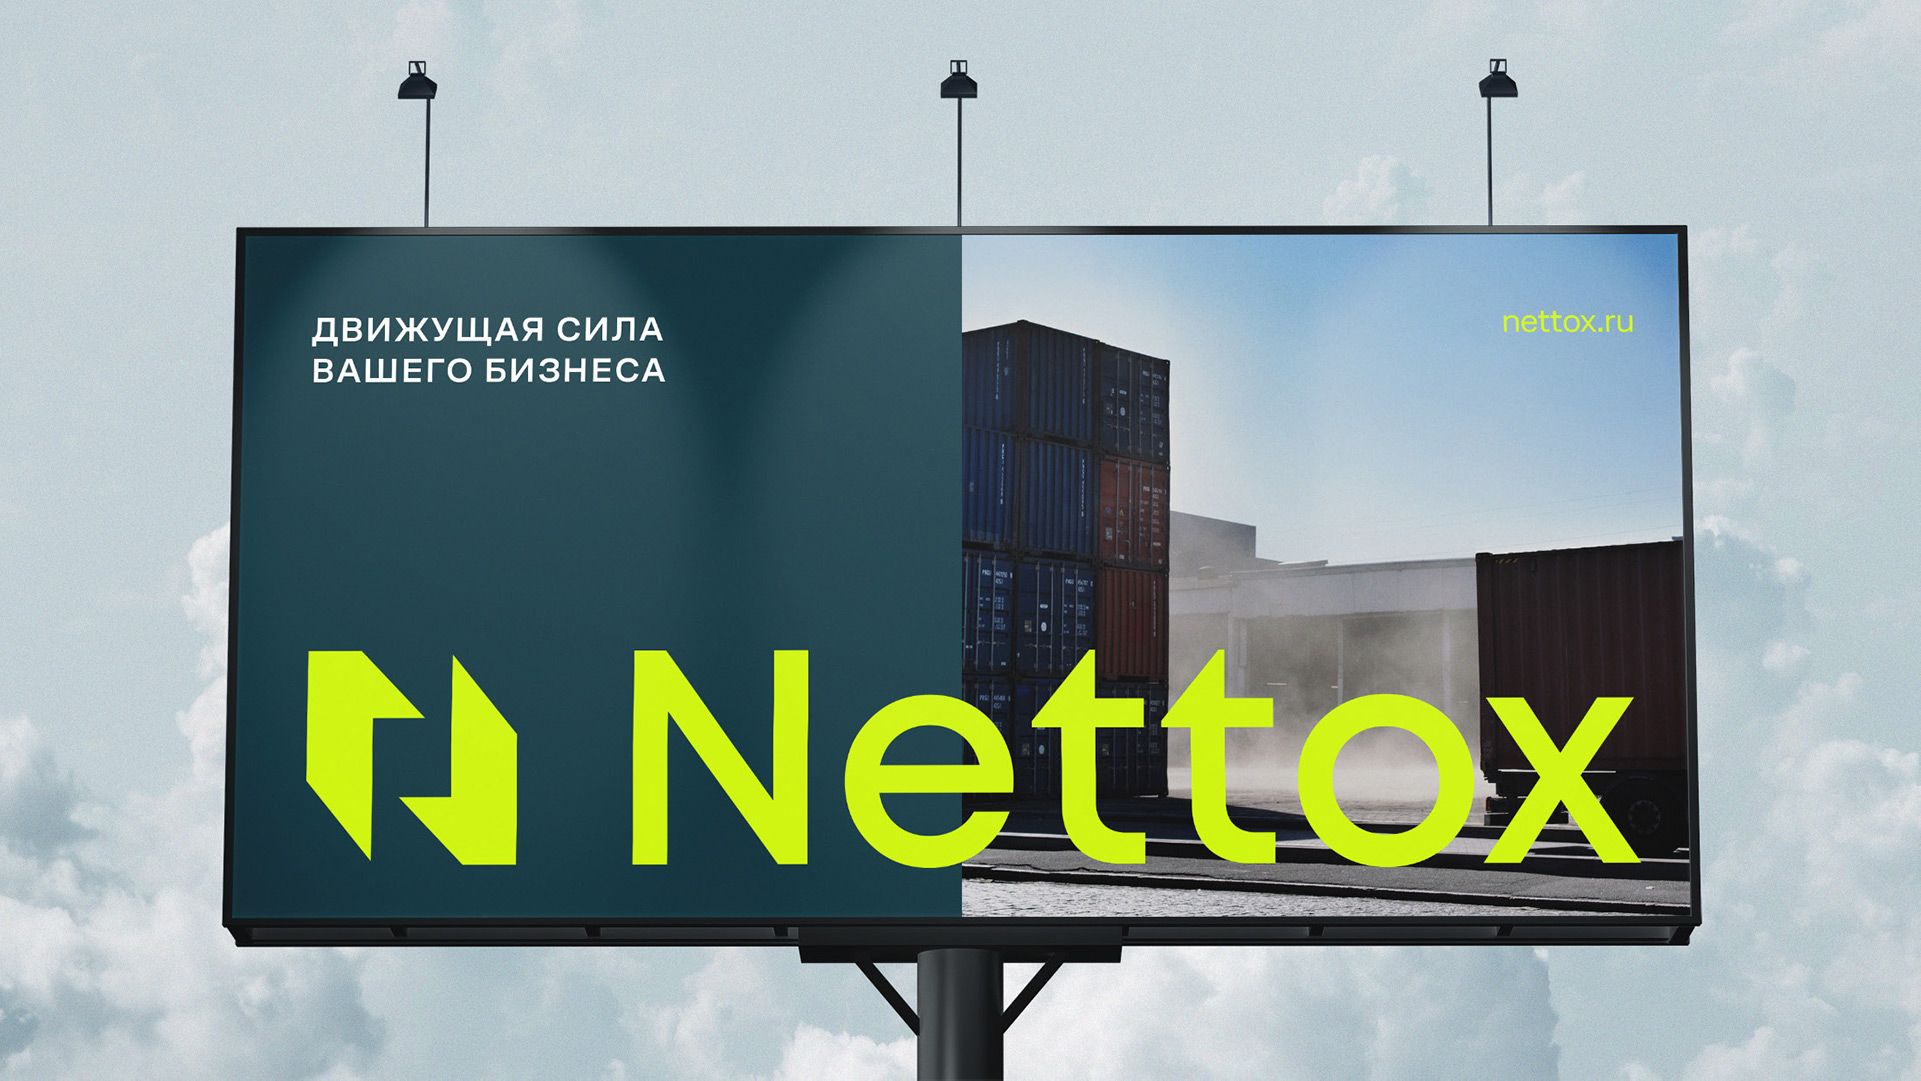 NETTOX image